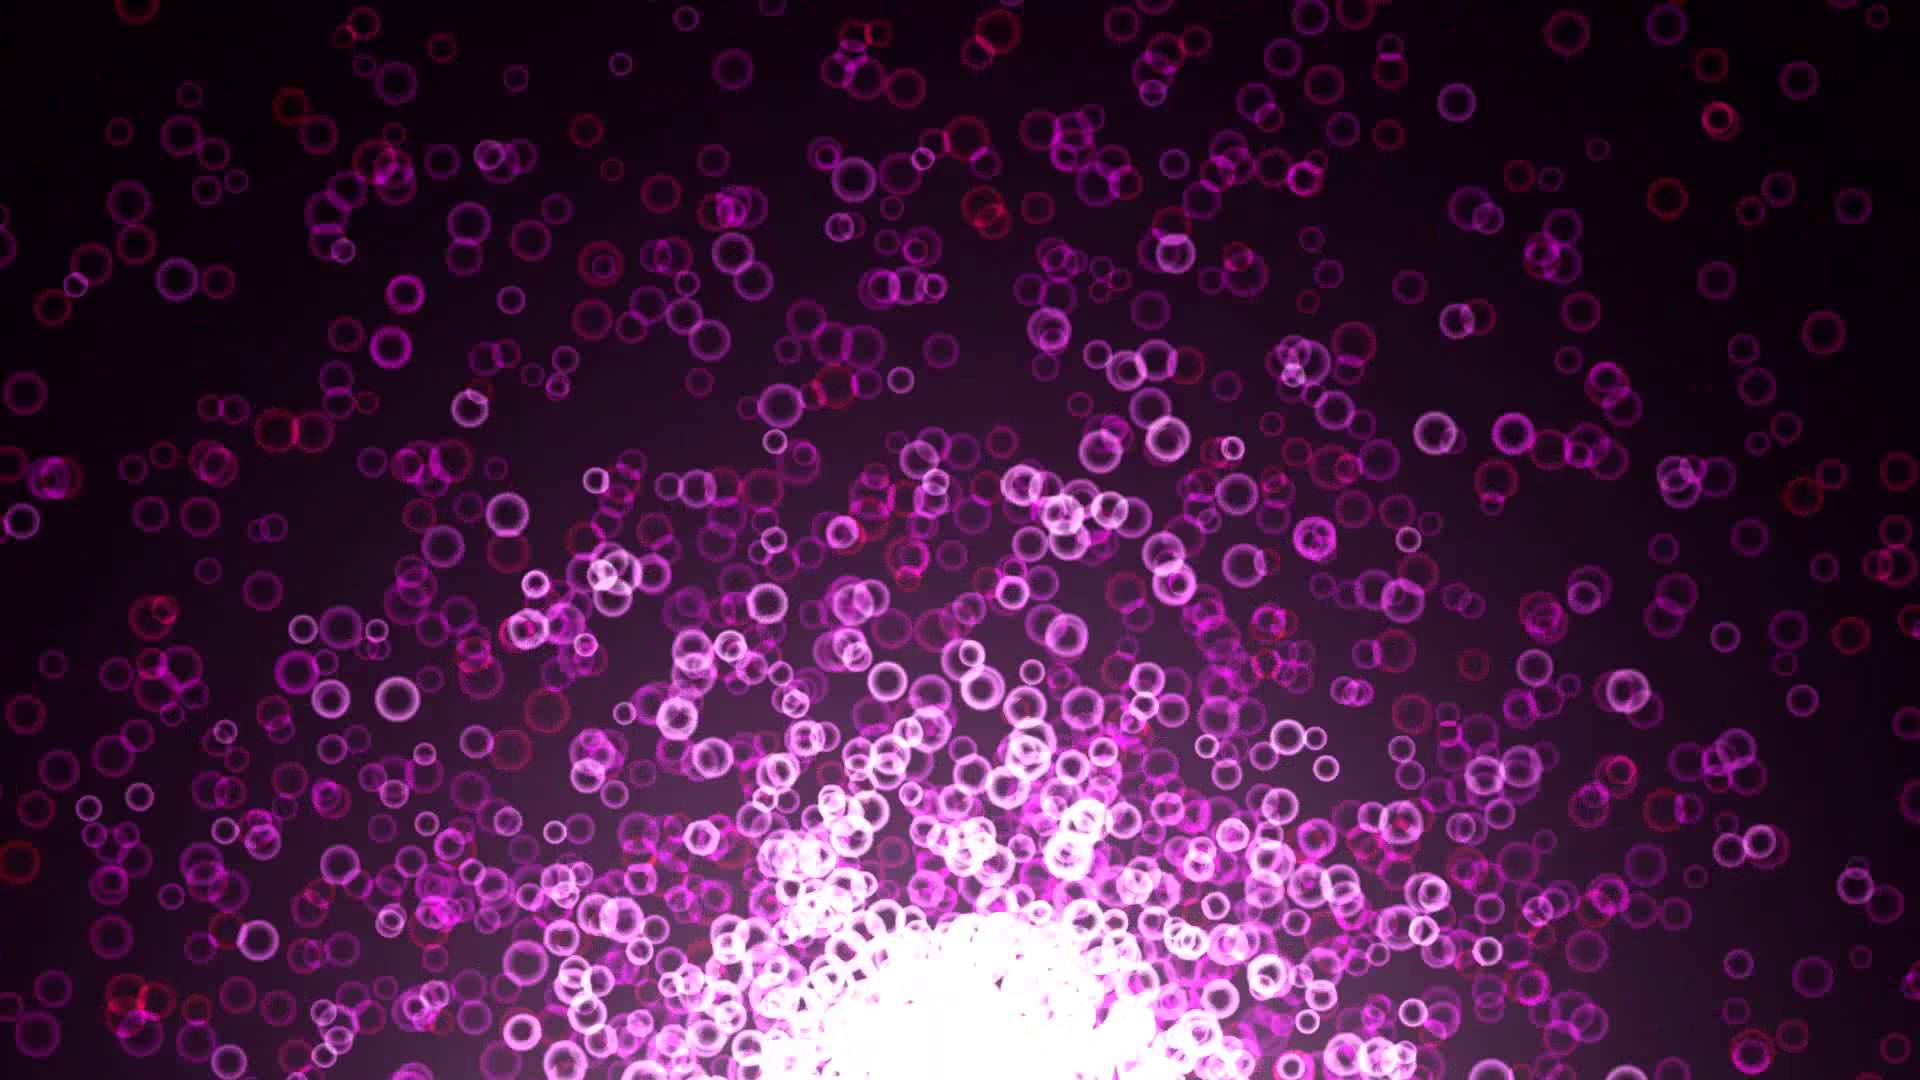 HD Pink Bubble Wallpaper Wallpapercraft